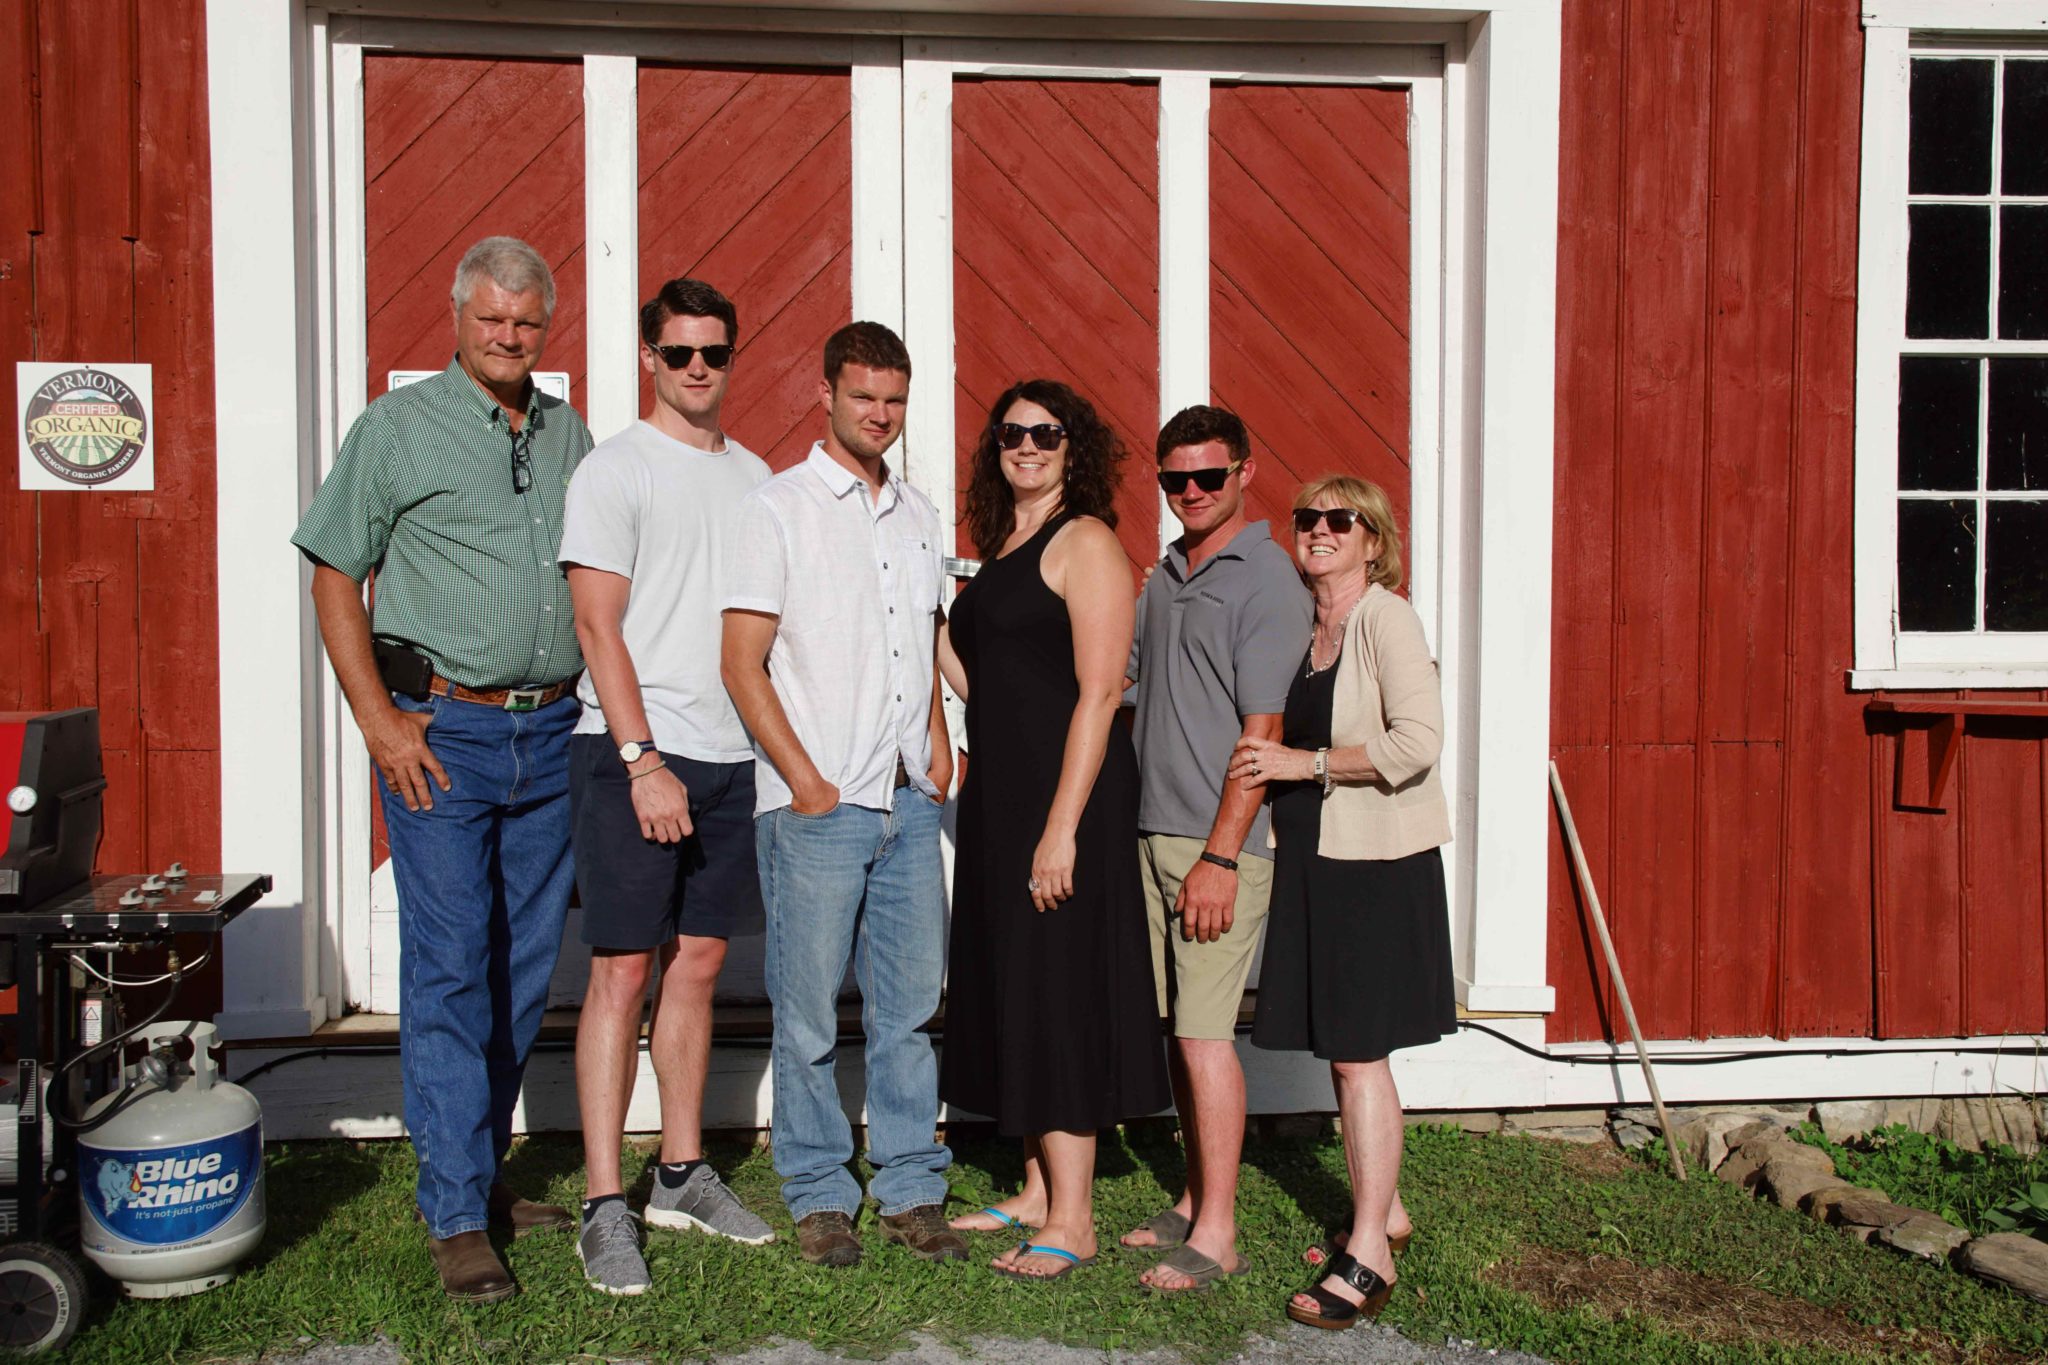 The Rpbert Stannard Family - Vermont Natural Beef